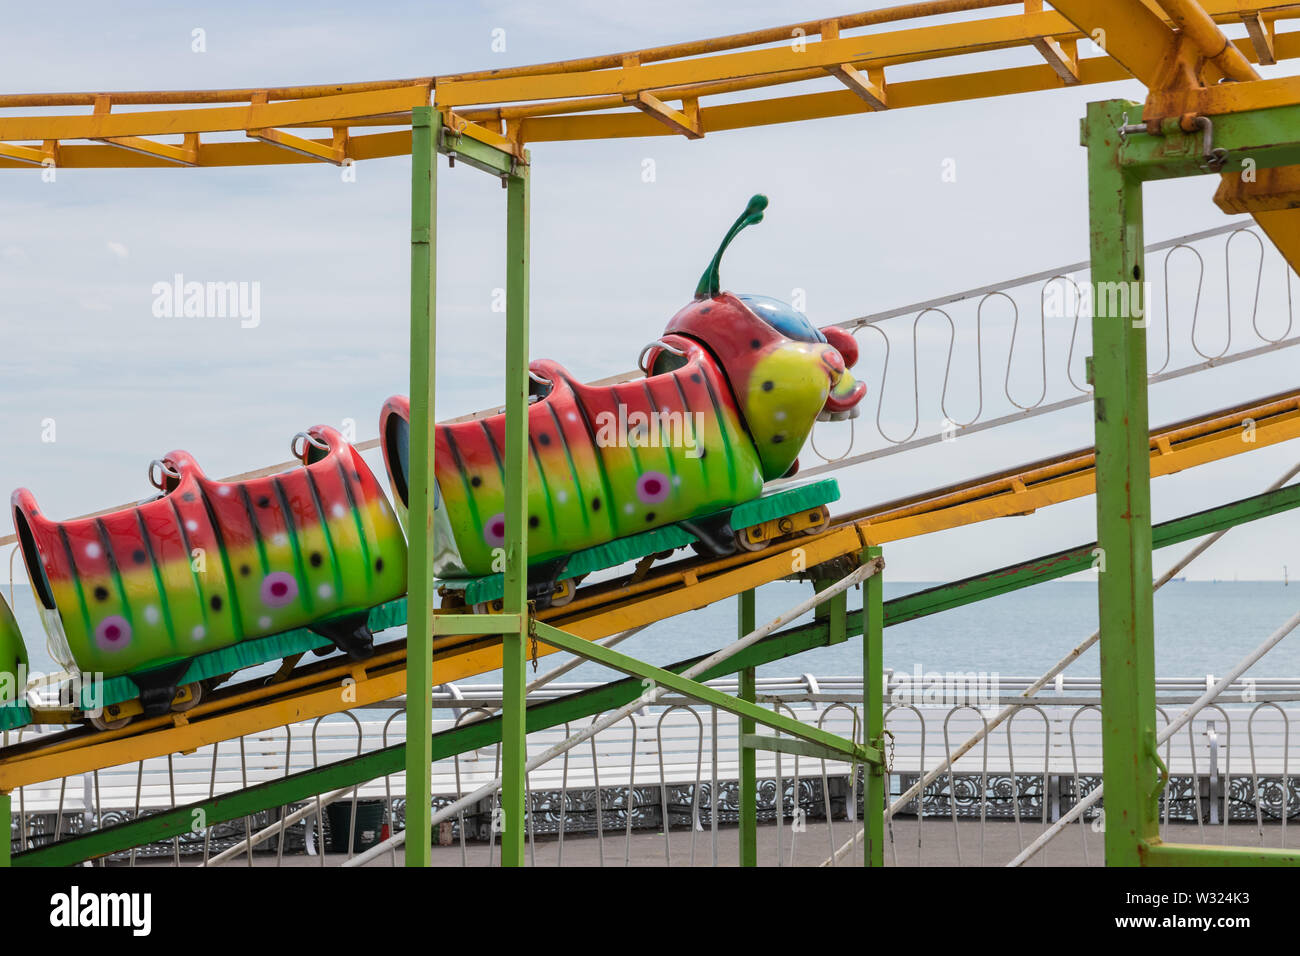 A child's caterpillar roller coaster at a funfair Stock Photo